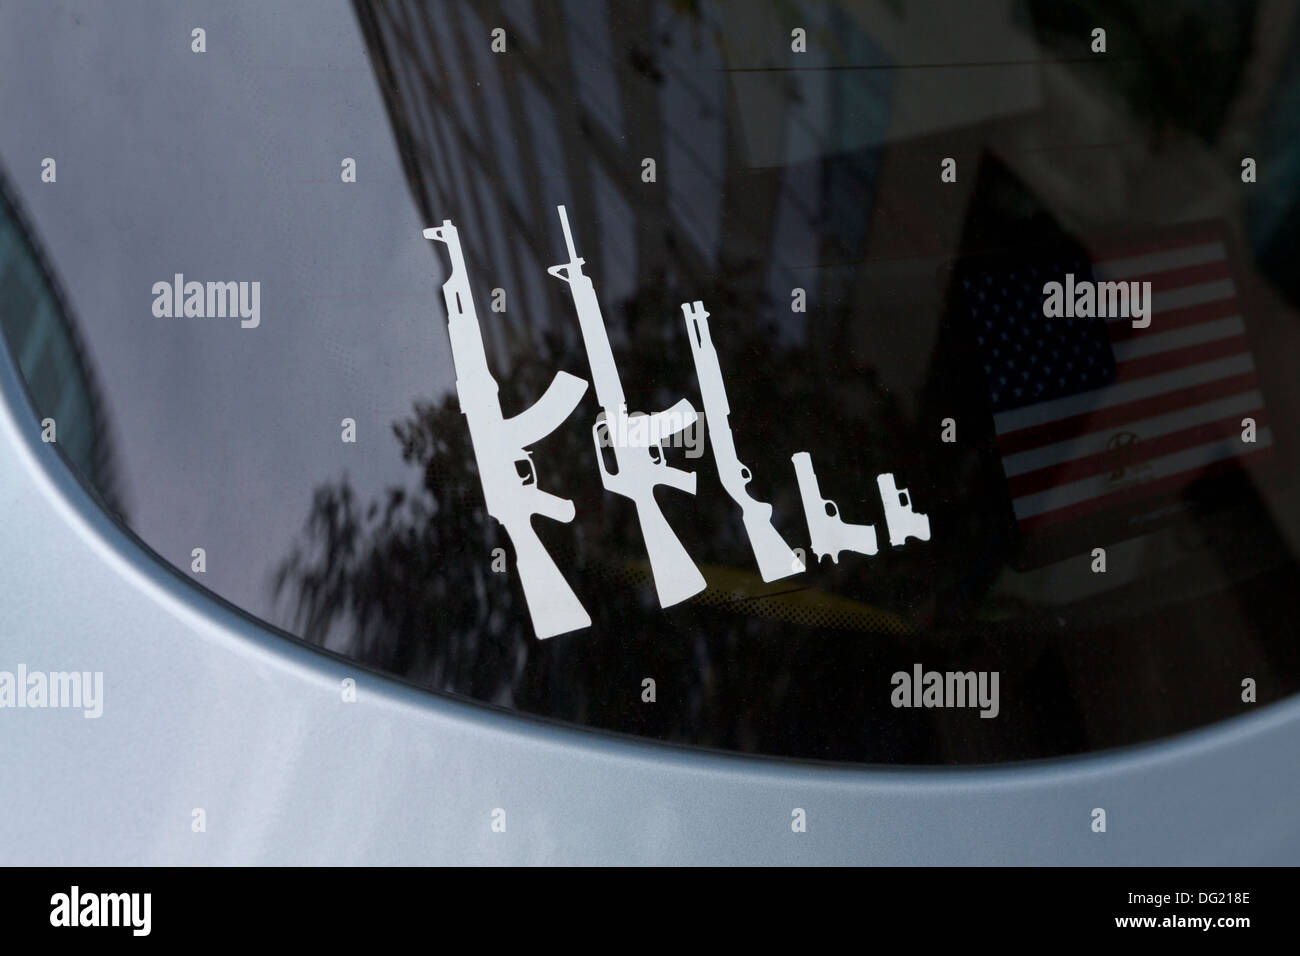 Gun family stick figures on rear windshield - USA Stock Photo